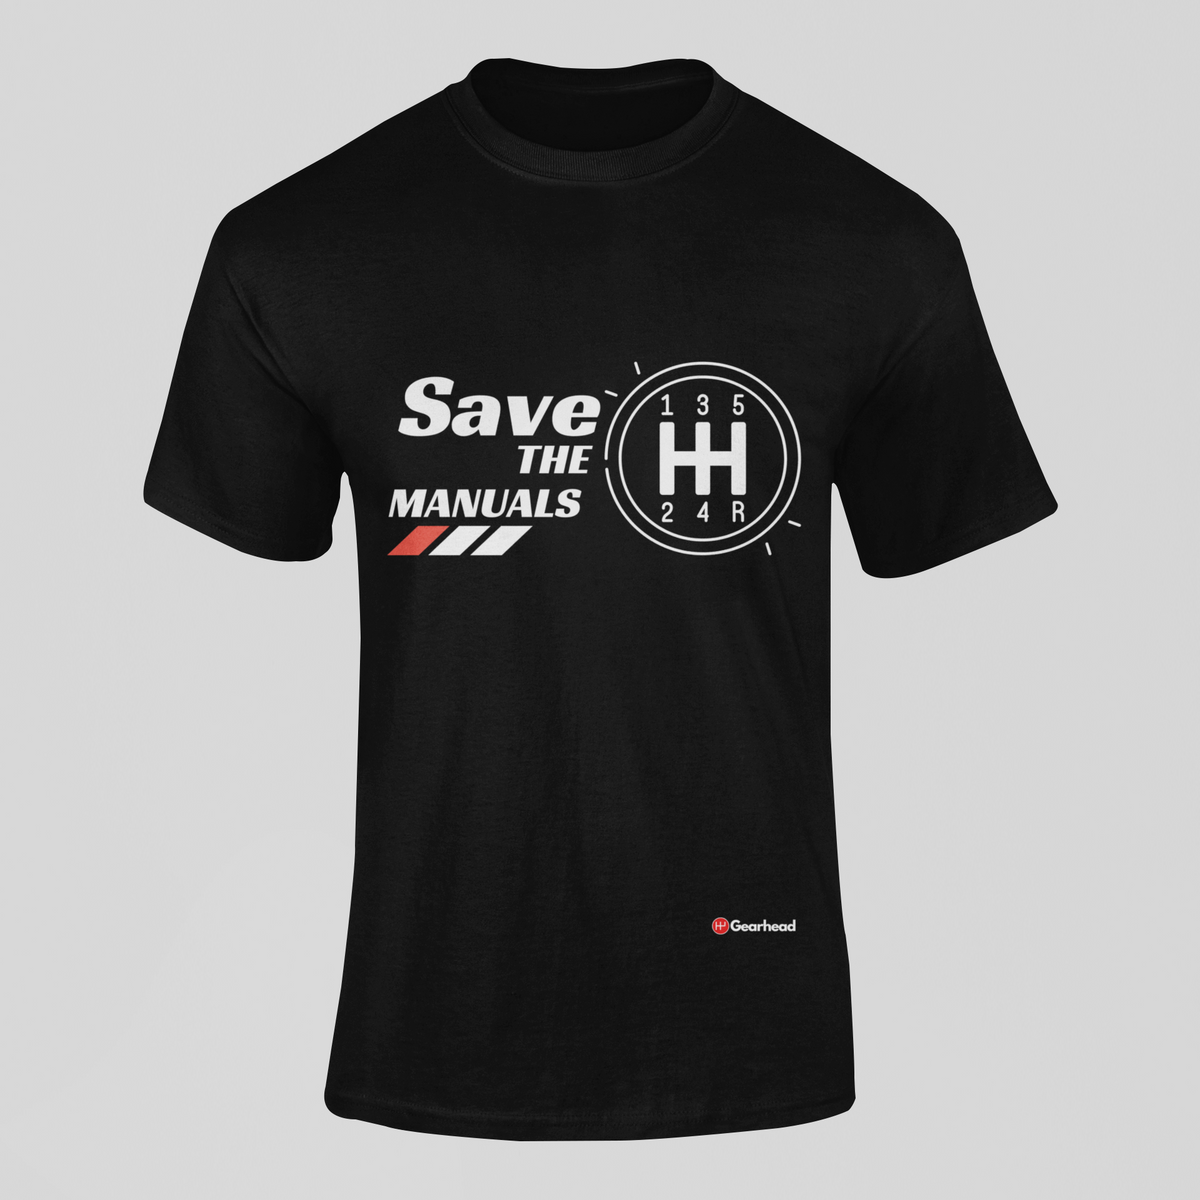 Nome do produto: Camiseta Save The Manuals